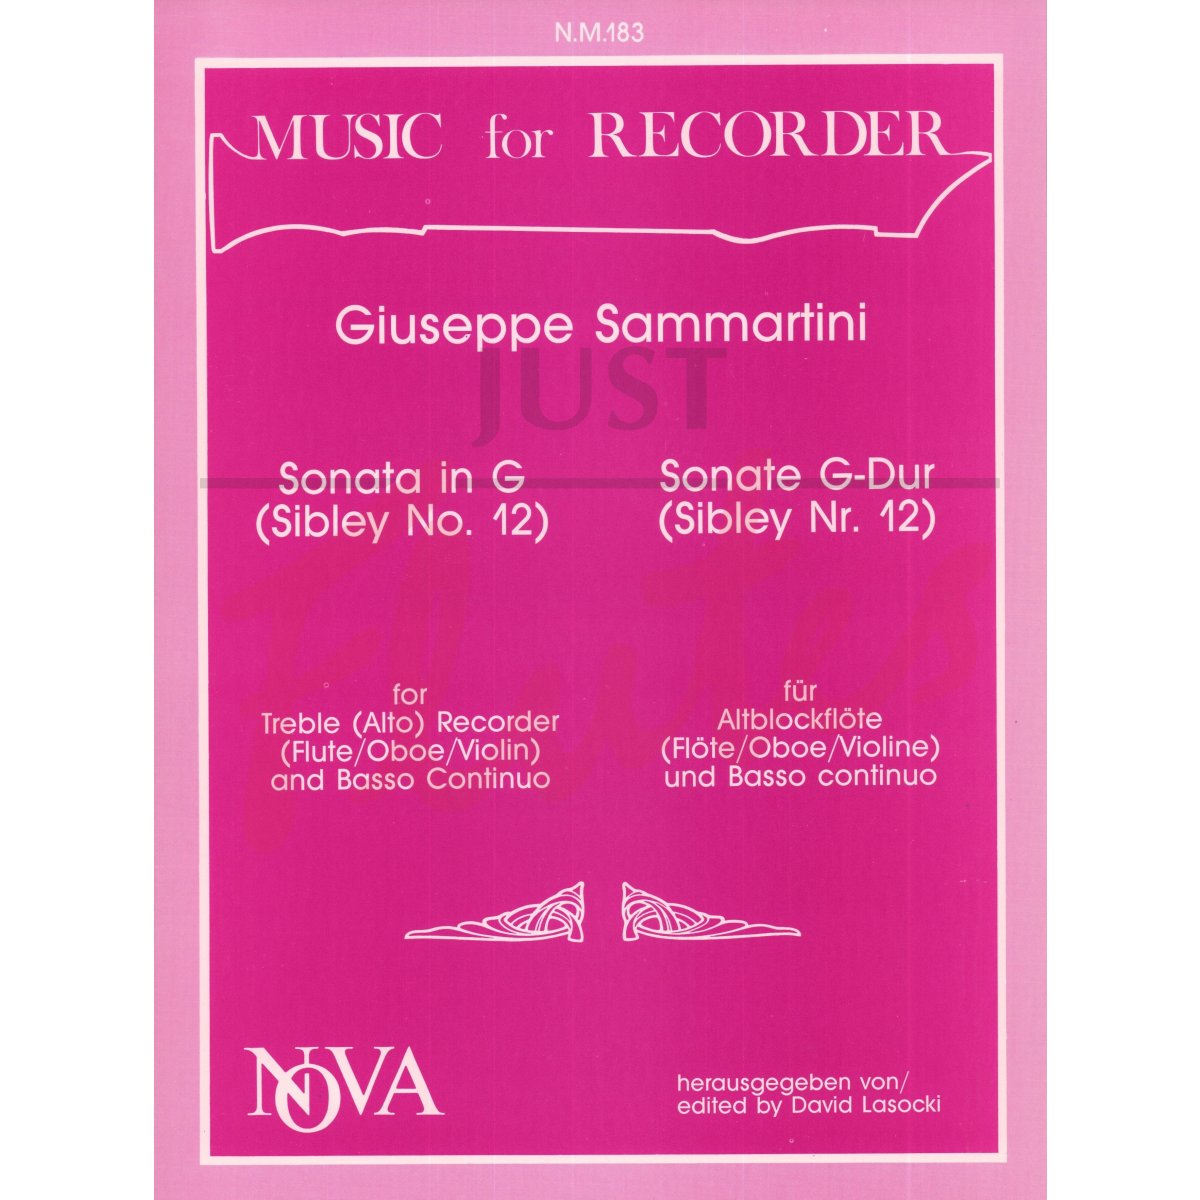 Sonata in G, Sibley No. 12 for Treble Recorder/Flute and Basso Continuo